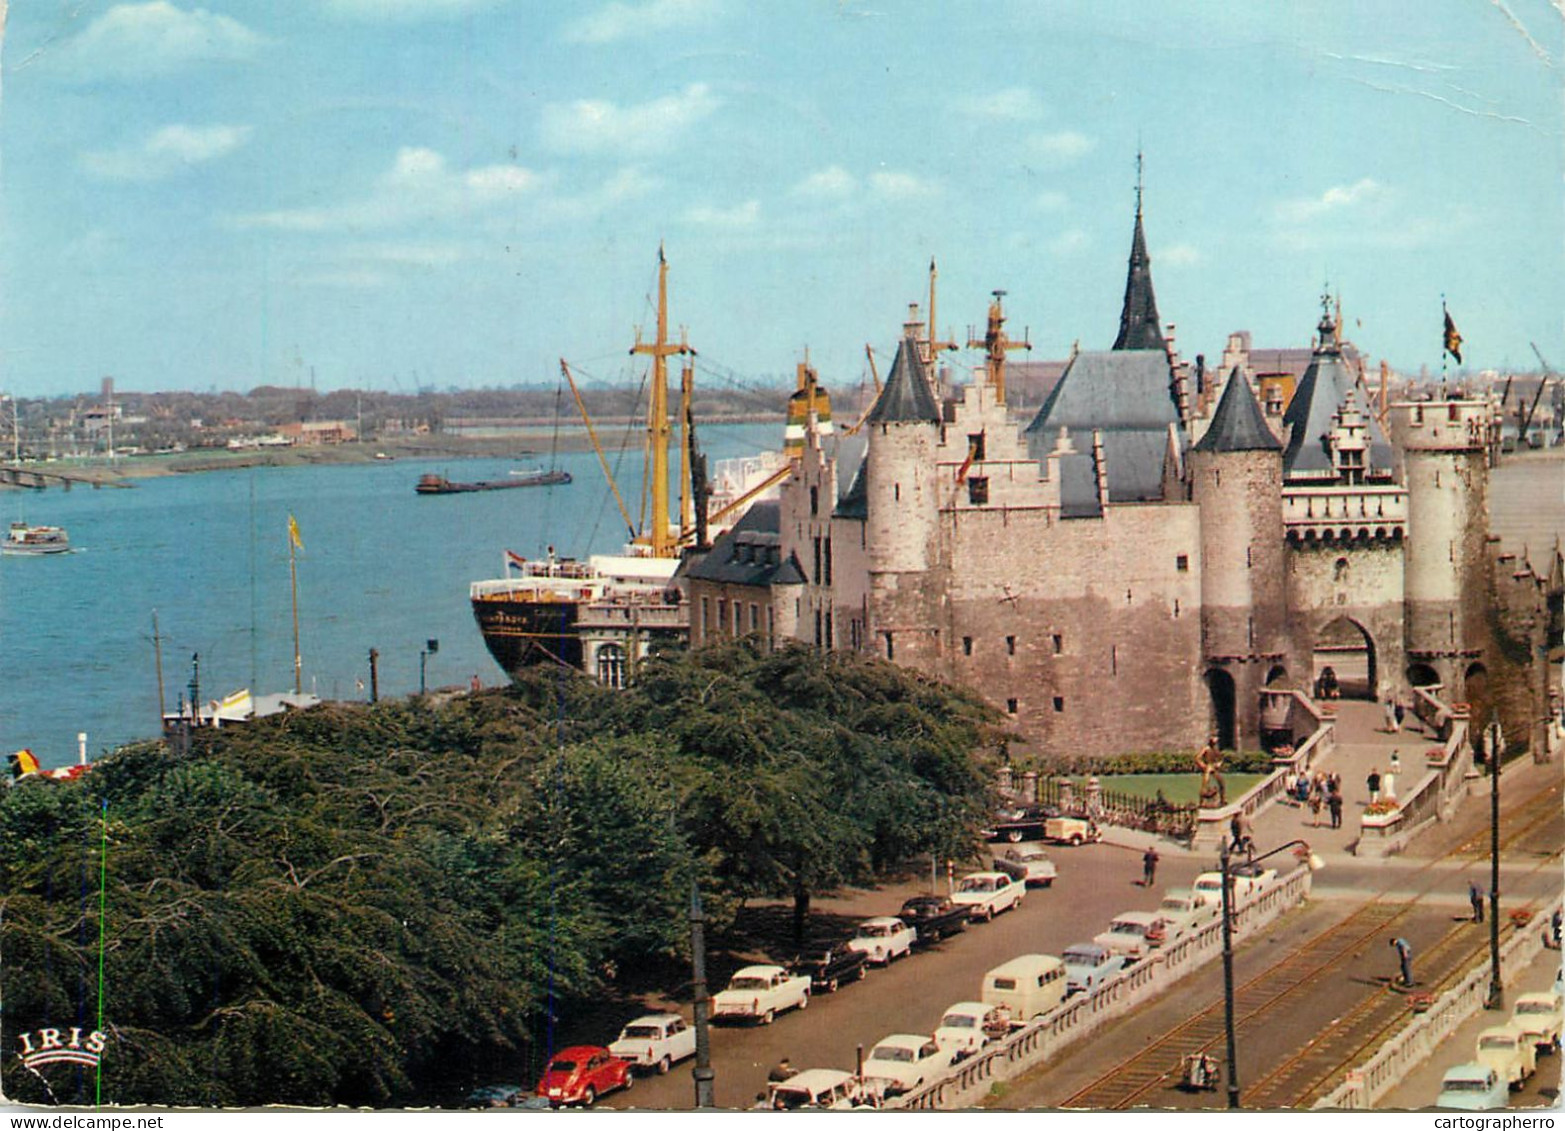 Navigation Sailing Vessels & Boats Themed Postcard Antwerpen Galleon And Citadel - Sailing Vessels